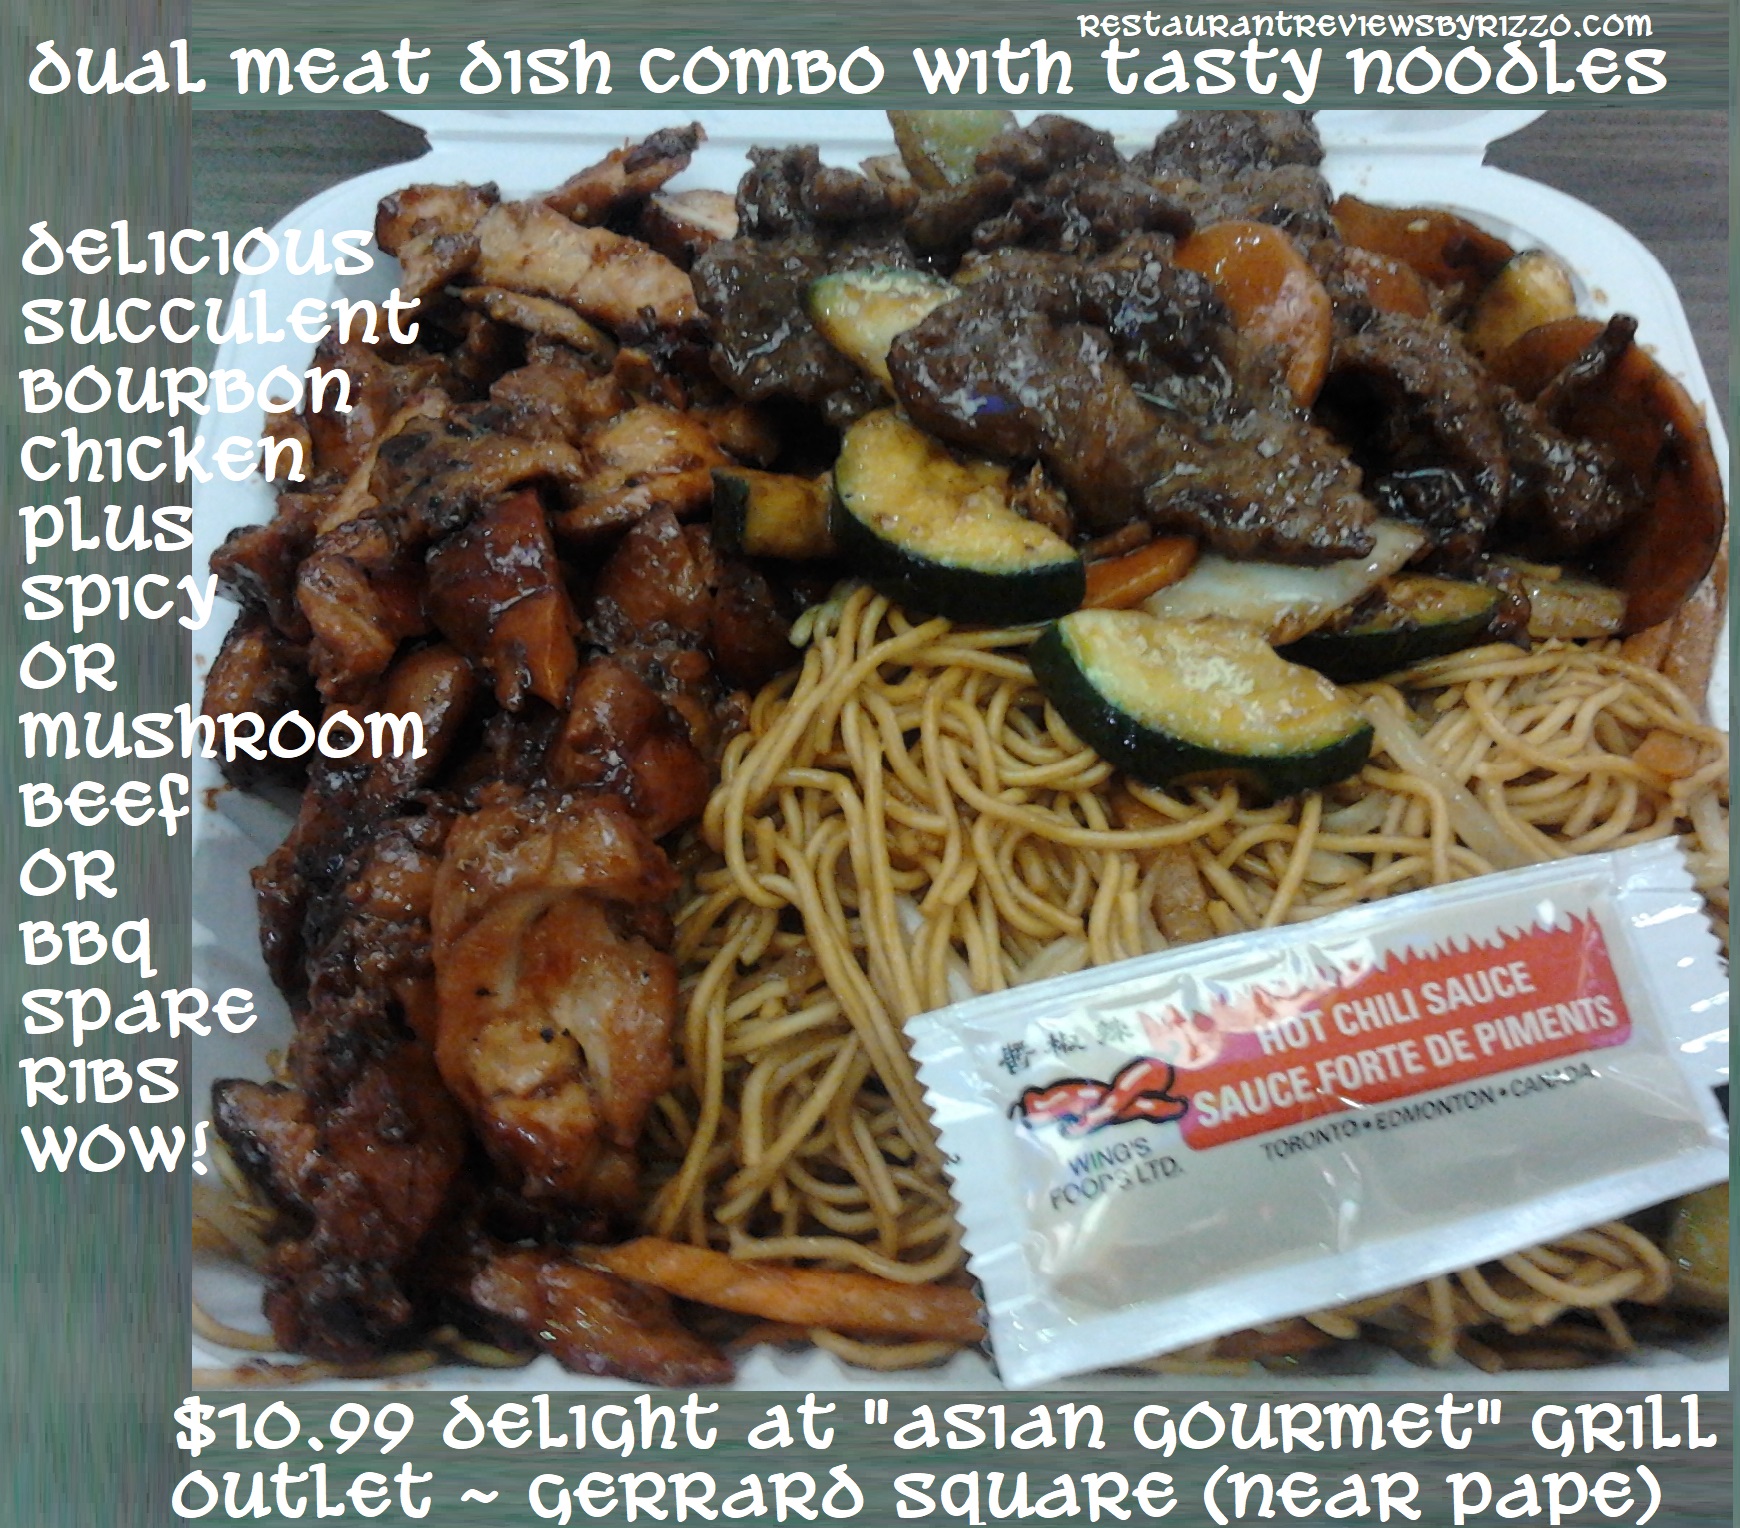 asian gourmet - gerrard square combo deal - wow!!